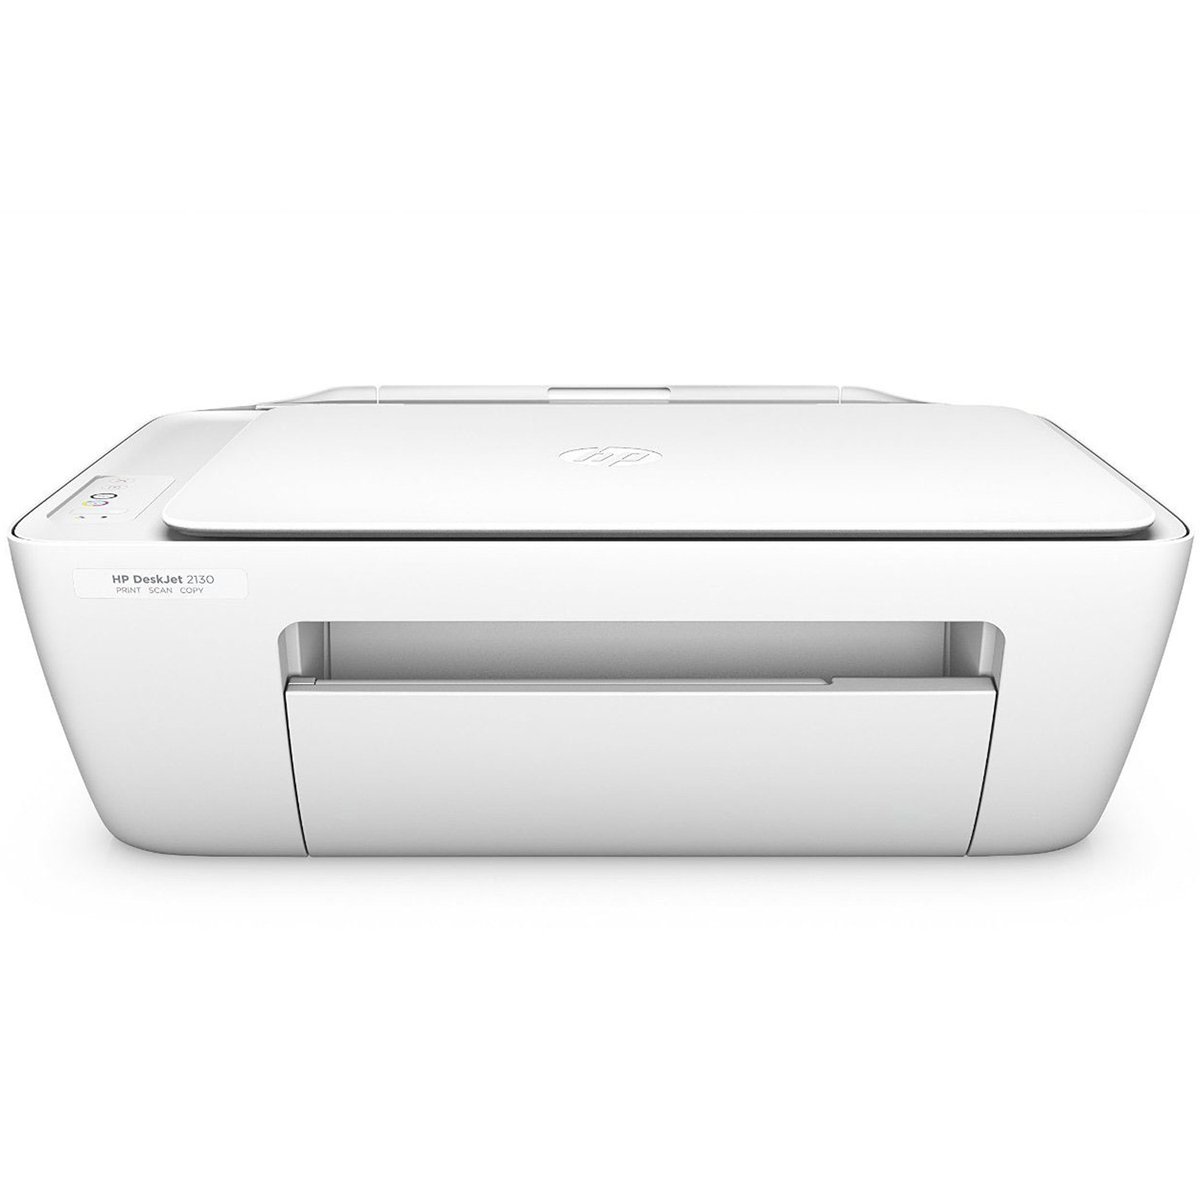 HP Deskjet 2130 All-in-One Color Printer